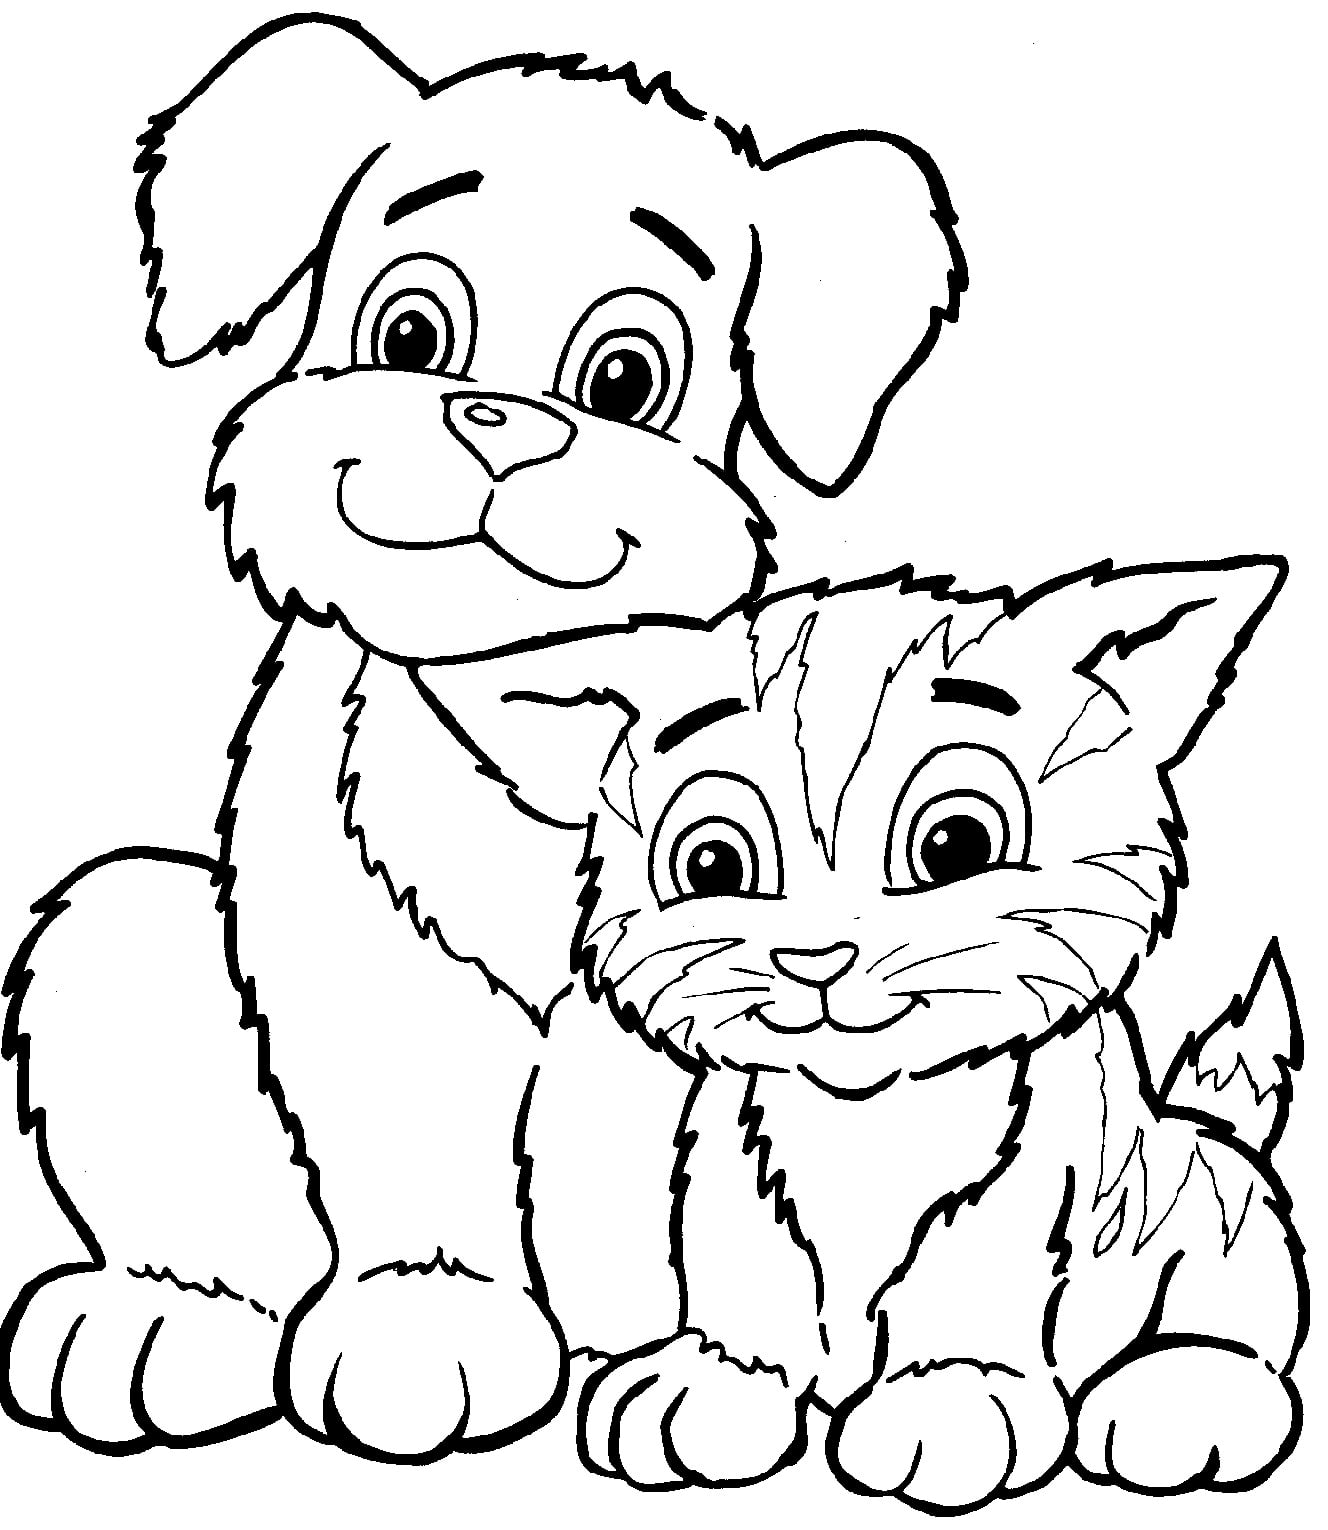 Dibujos de Gatos para Colorear